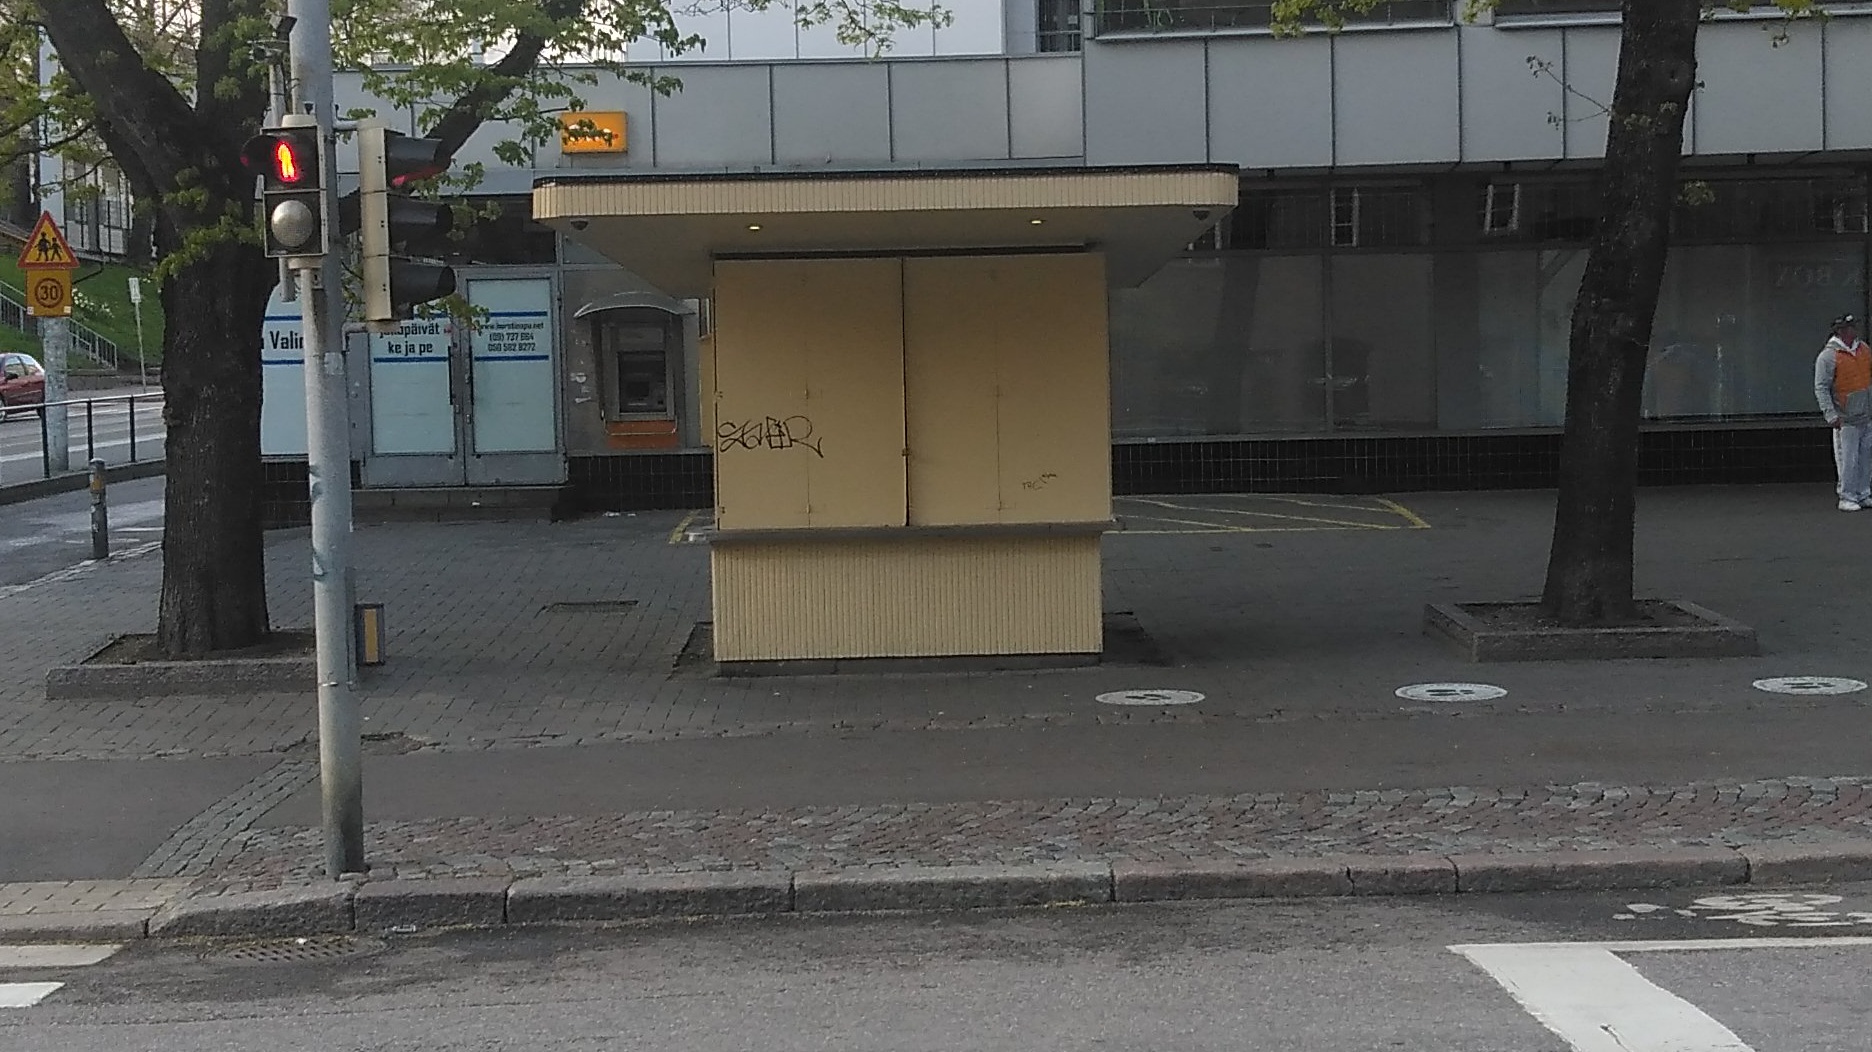 Kioski Helsinginkatu 19:n ja Fleminginkatu 19:n kulmassa. rephoto